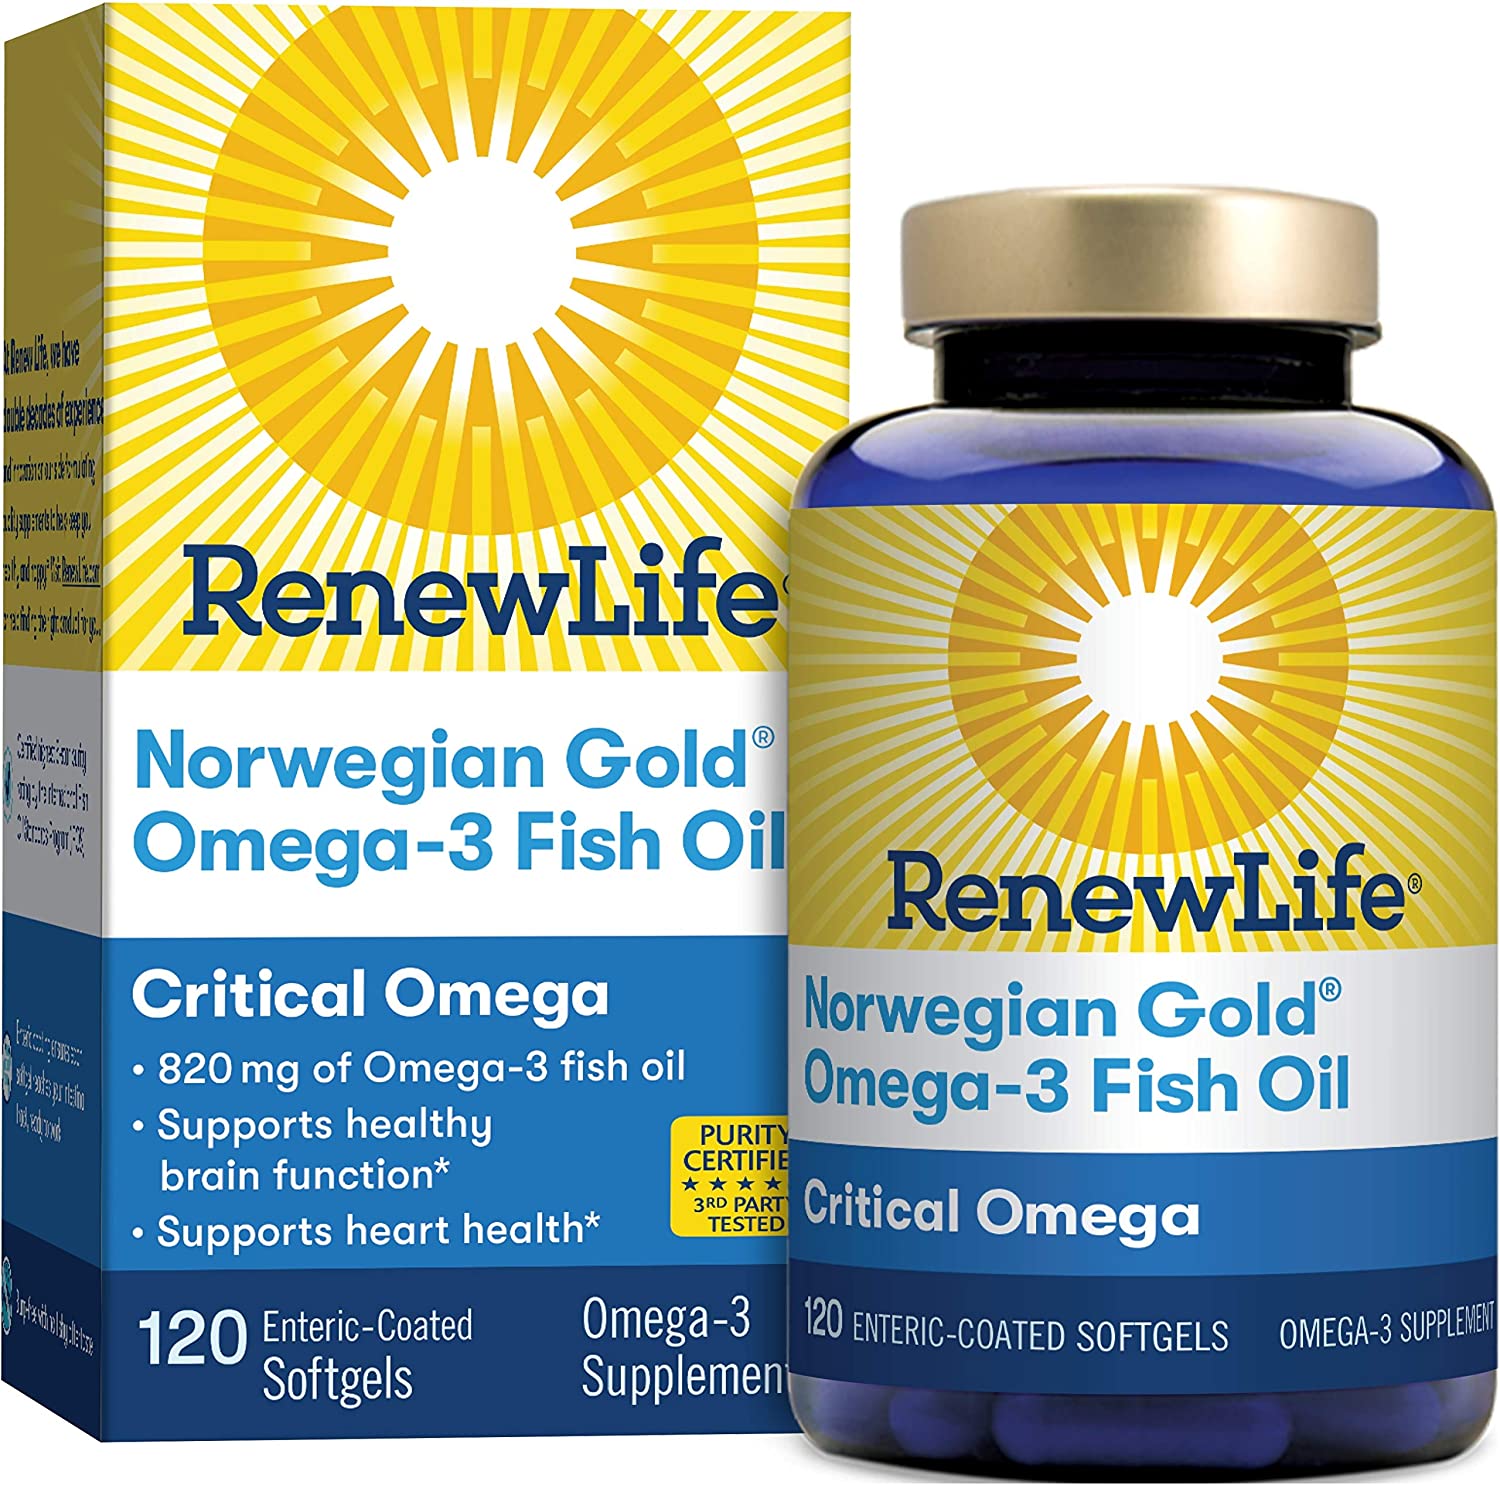 Renew Life Re Norwegian Gold Omega-3 Fish Oil Orange